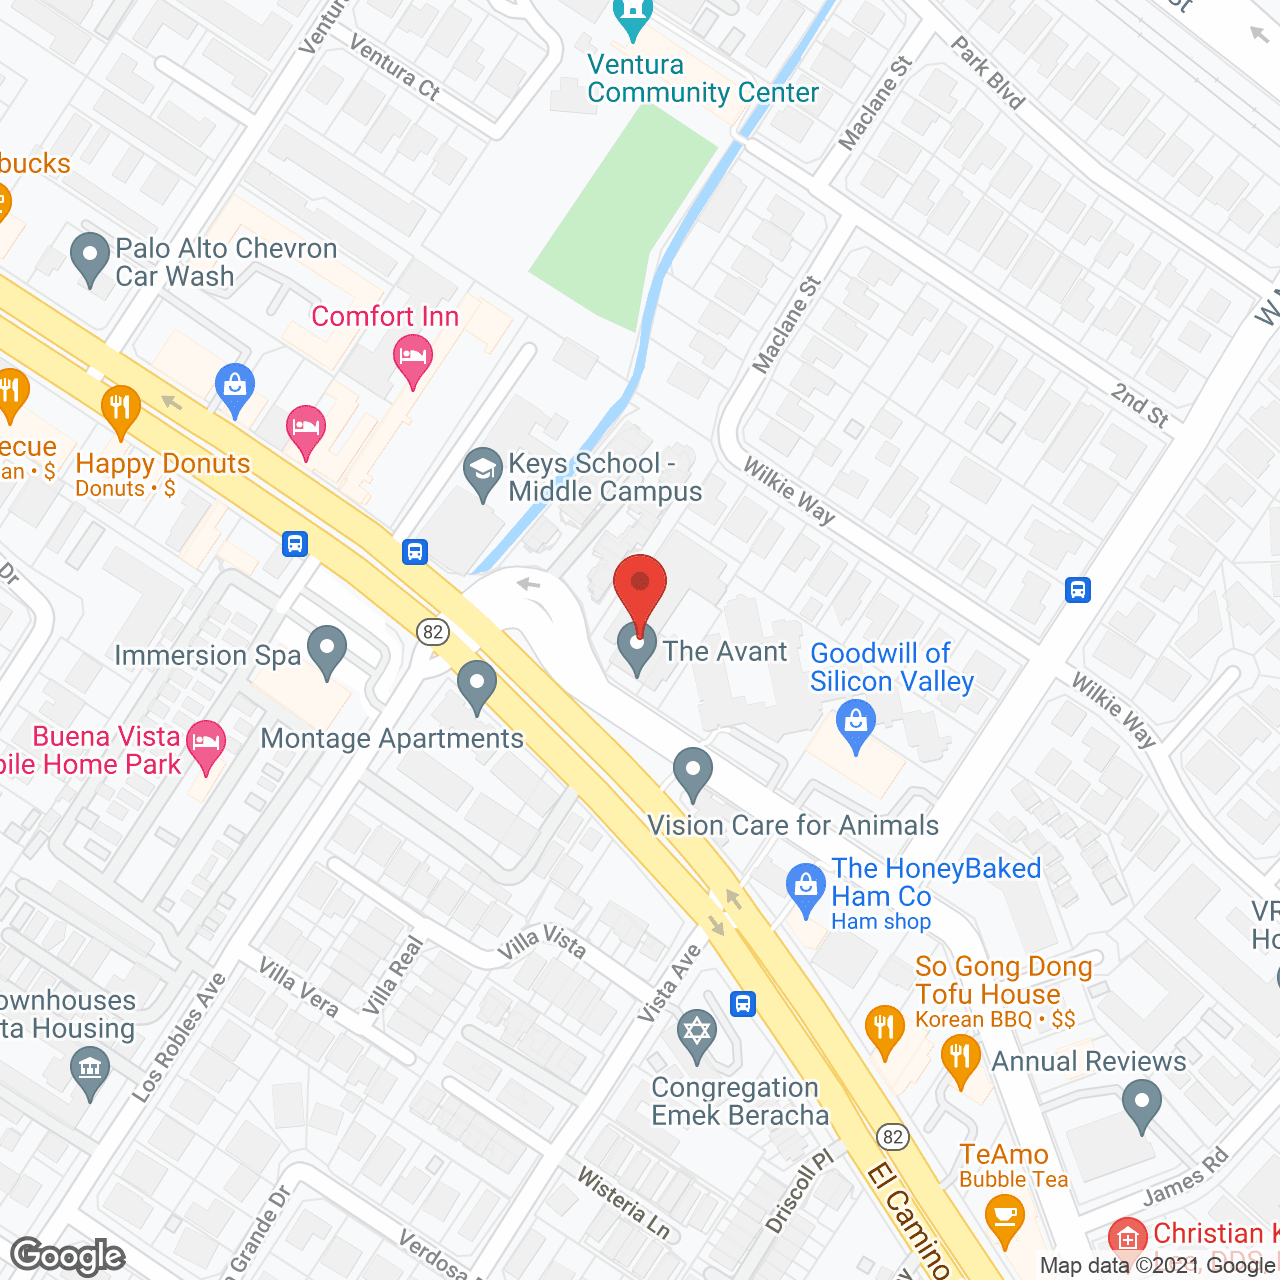 The Avant in google map